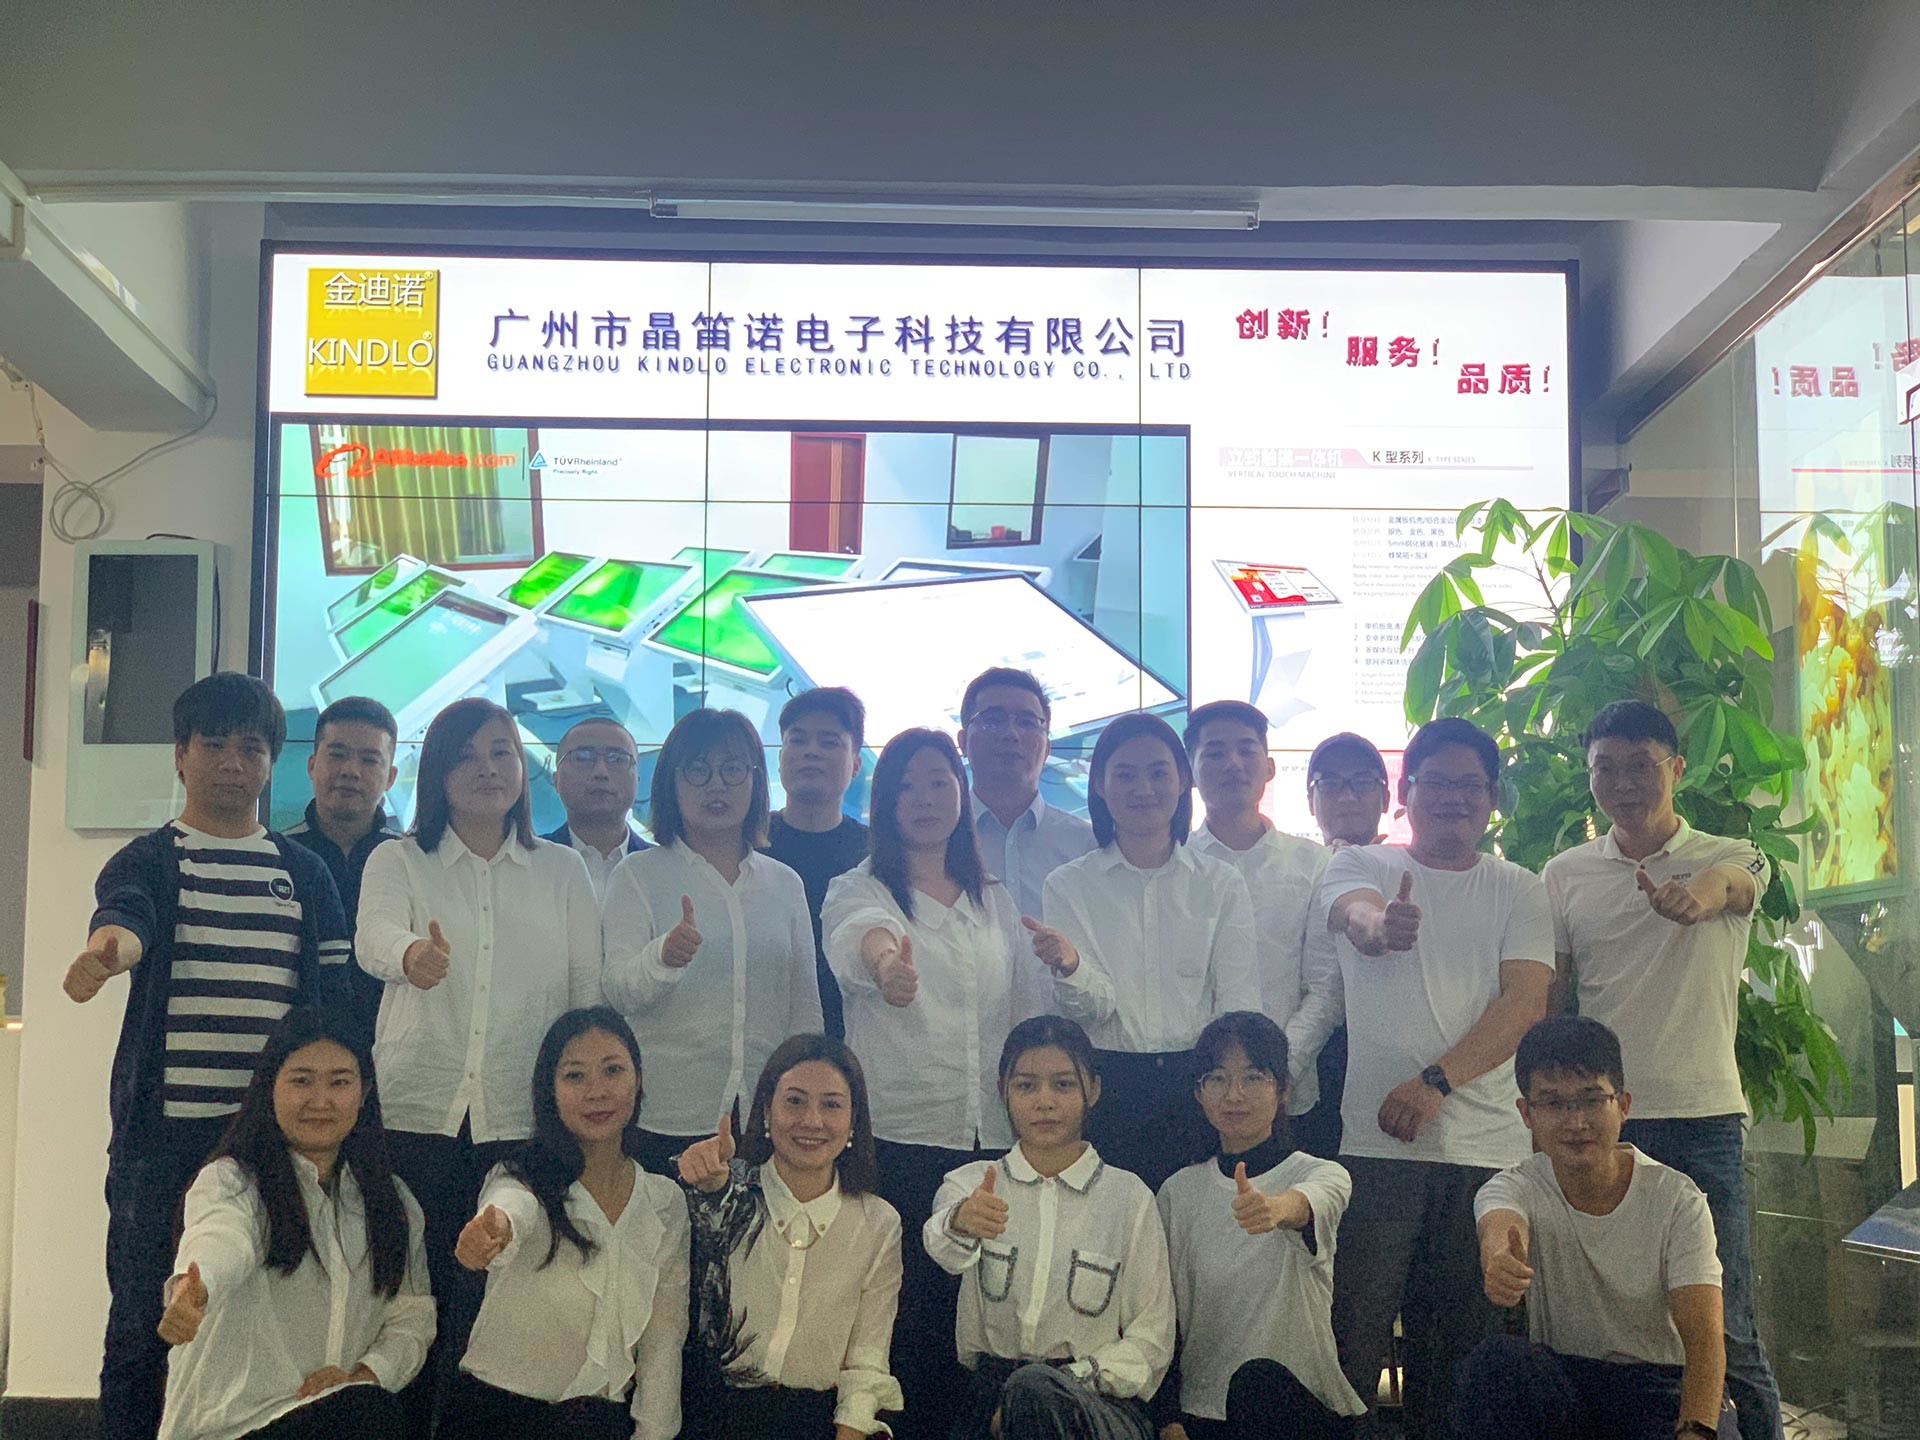 Trung Quốc Guangzhou Jingdinuo Electronic Technology Co., Ltd. hồ sơ công ty